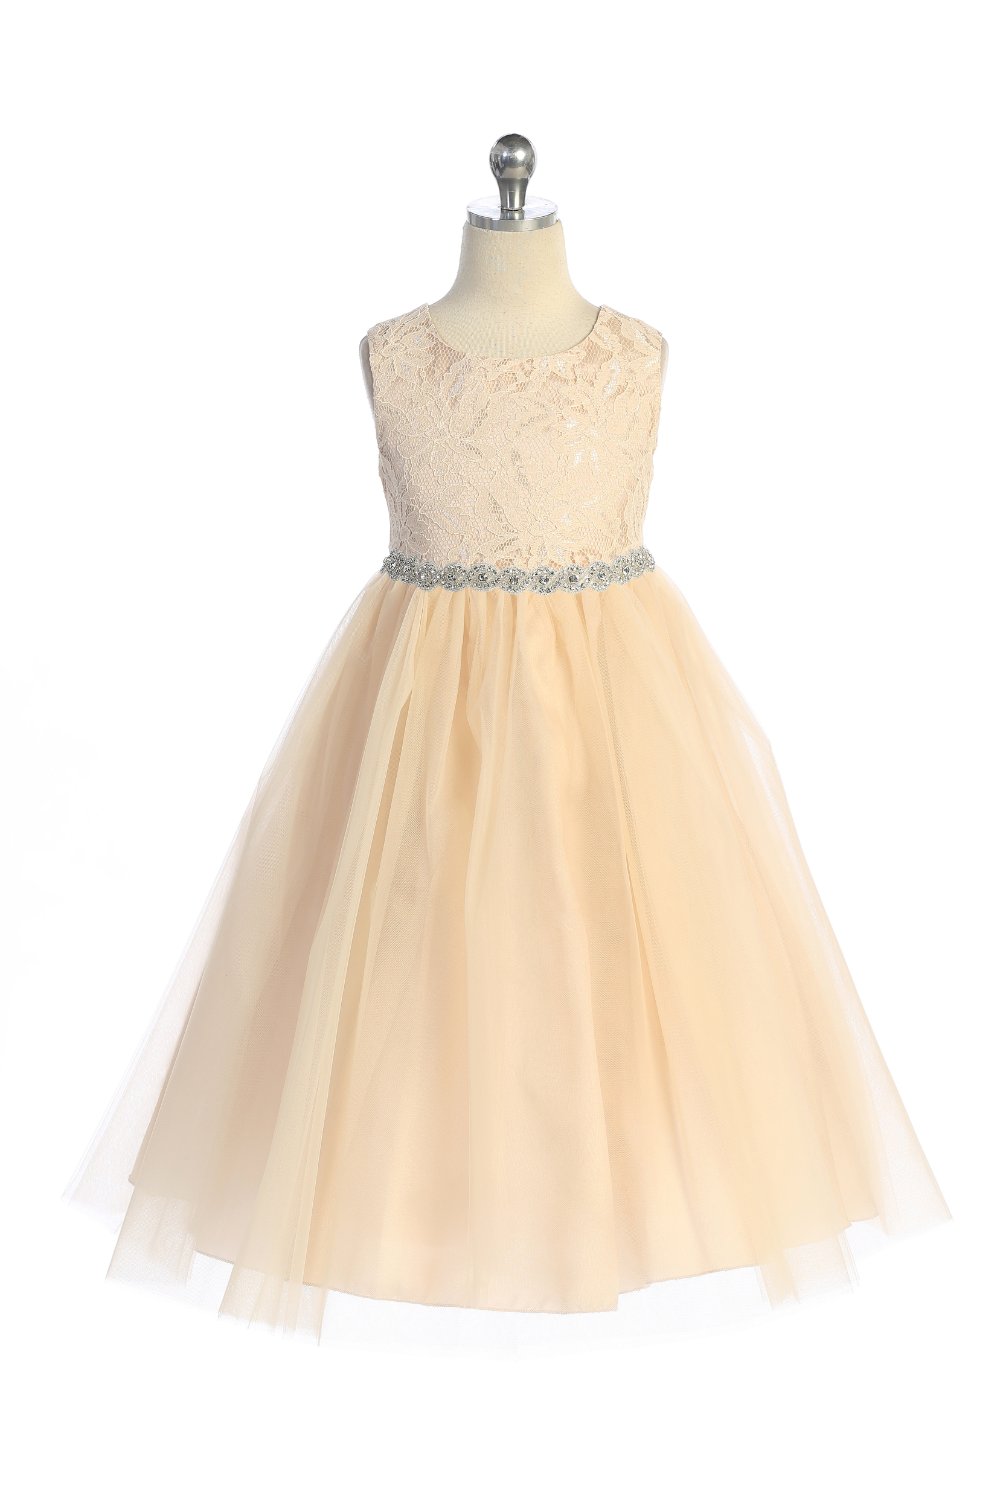 524-A Long Lace Illusion Dress w/Rhinestone Trim